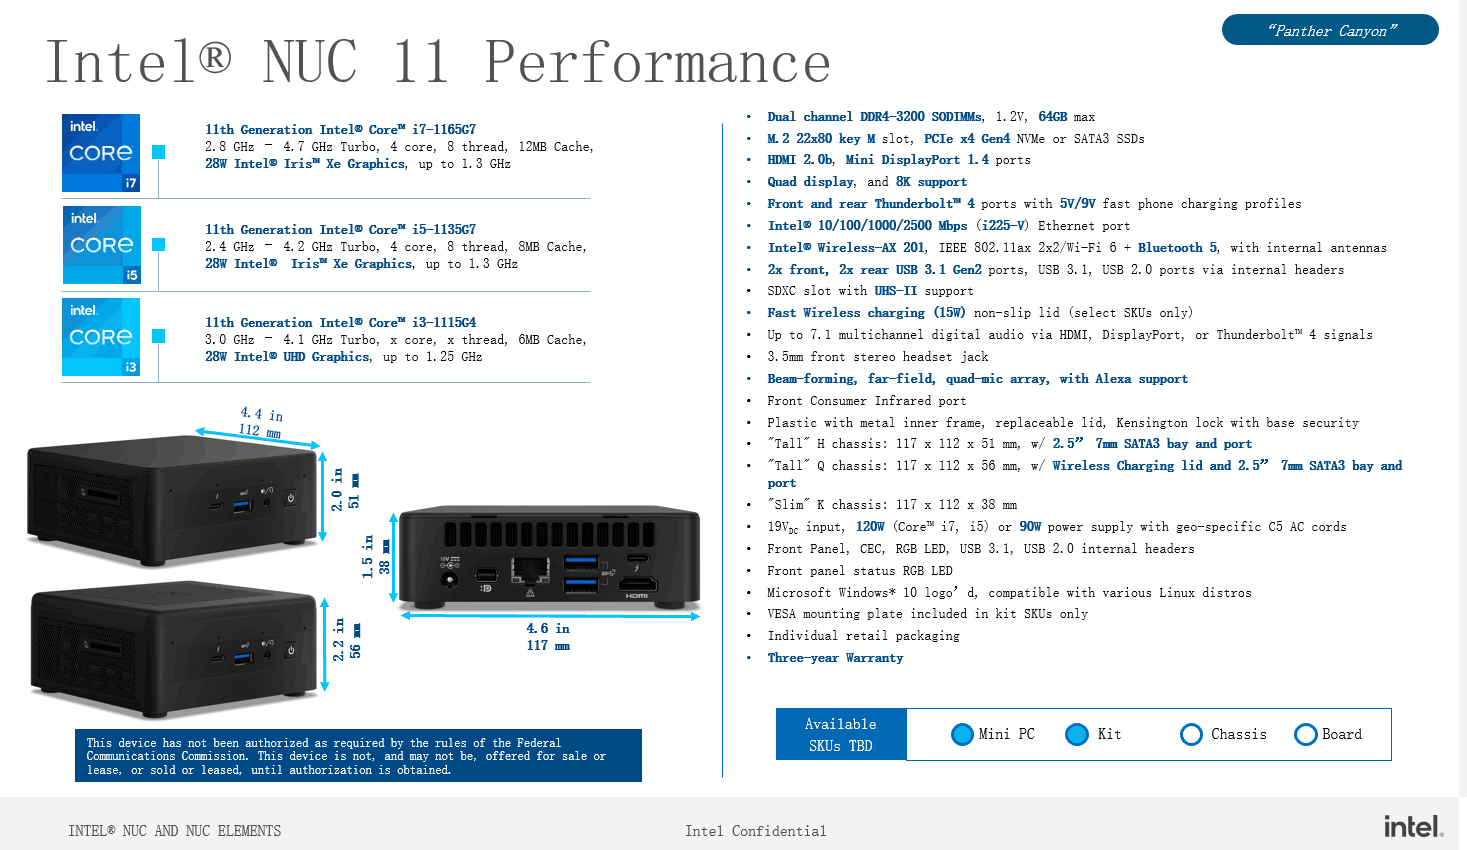 Intel NUC 11 Performance